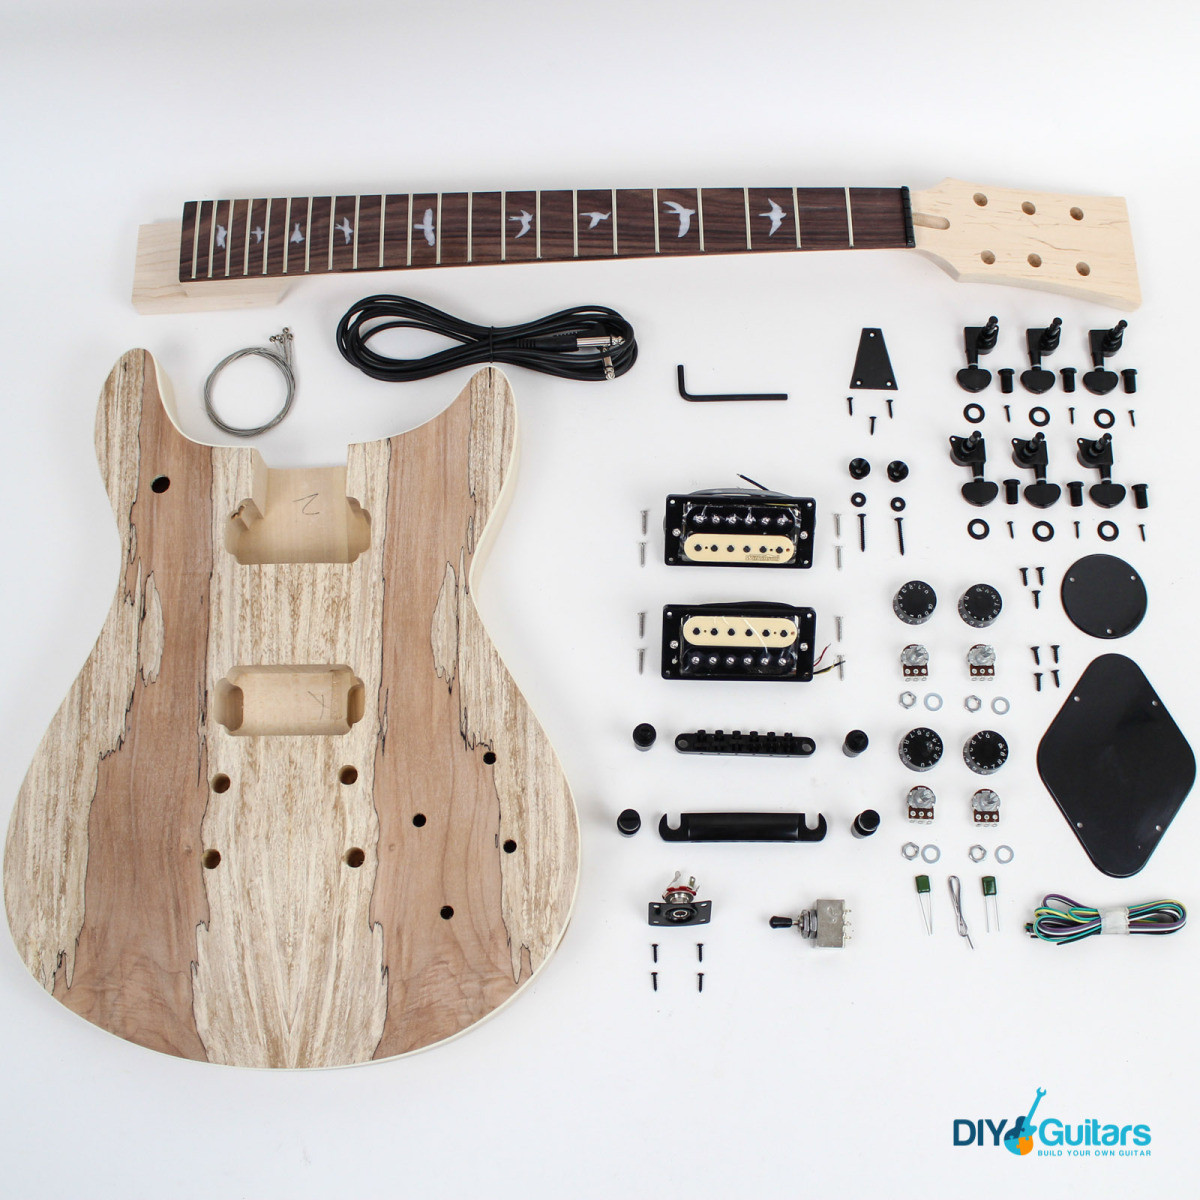 Best ideas about Guitar DIY Kits
. Save or Pin USA Special Guitar Kit DIY Guitars Now.